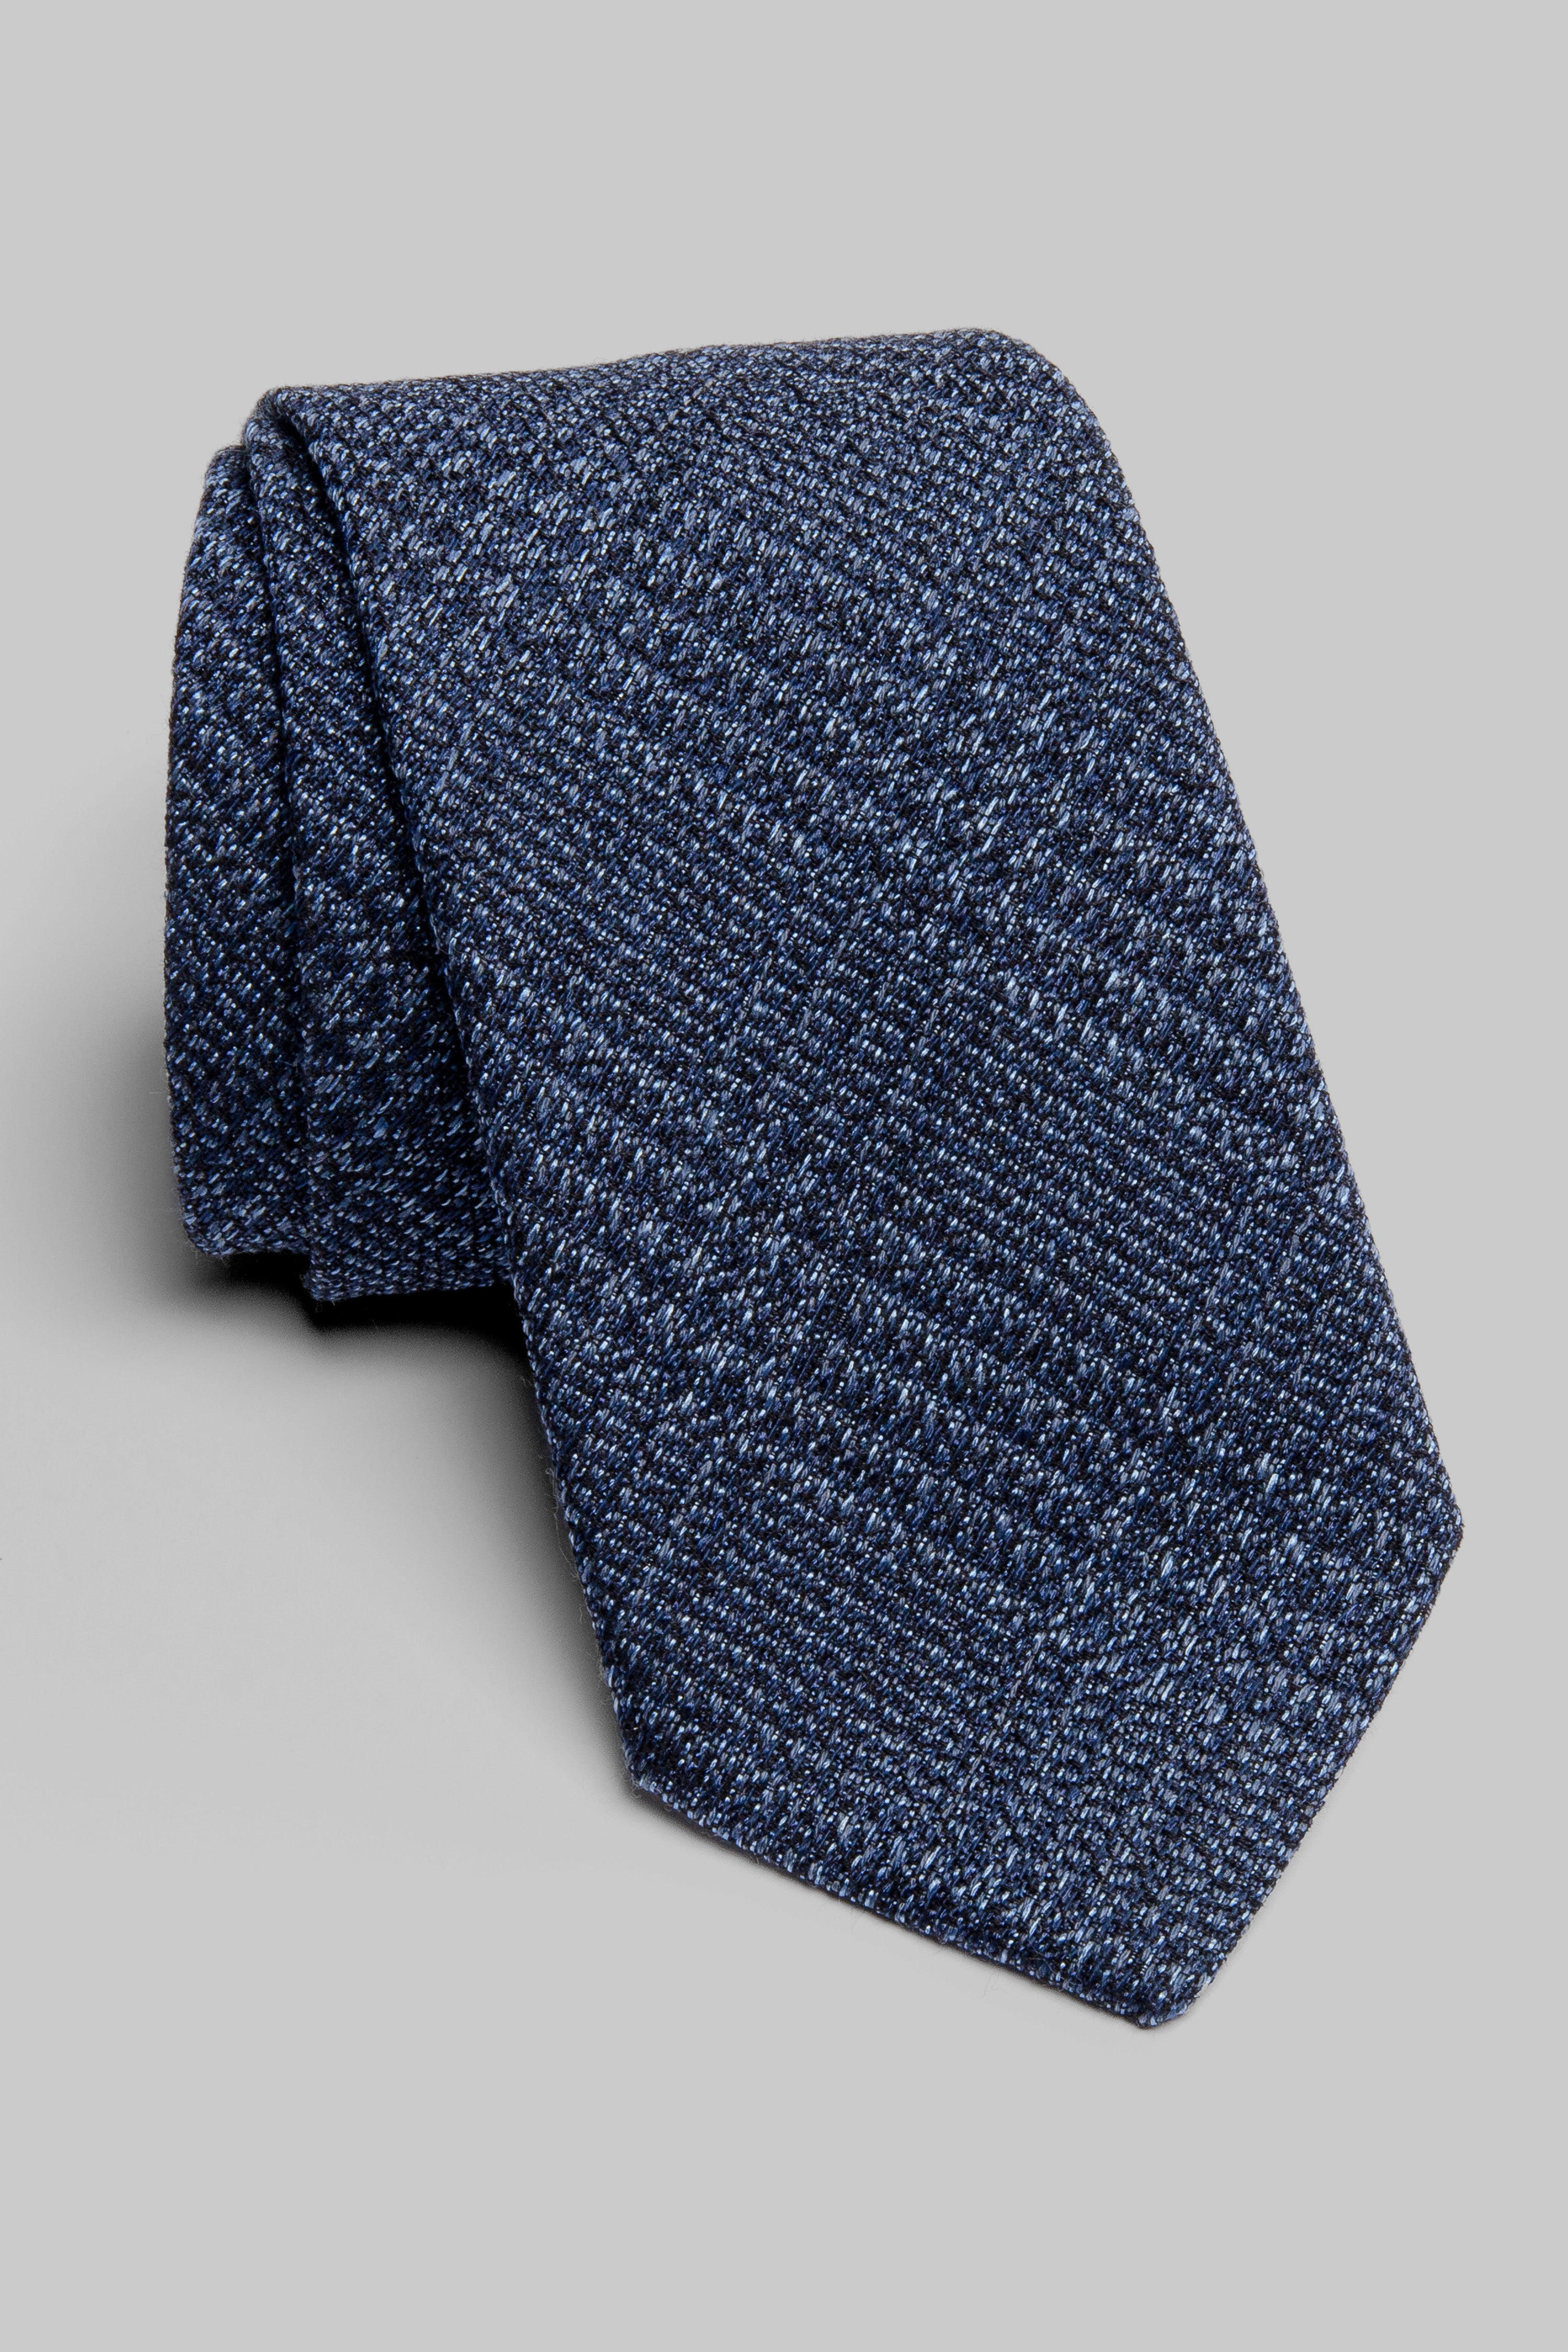 Vue alternative Cravate Tissée Prince de Galles Bleu Marine